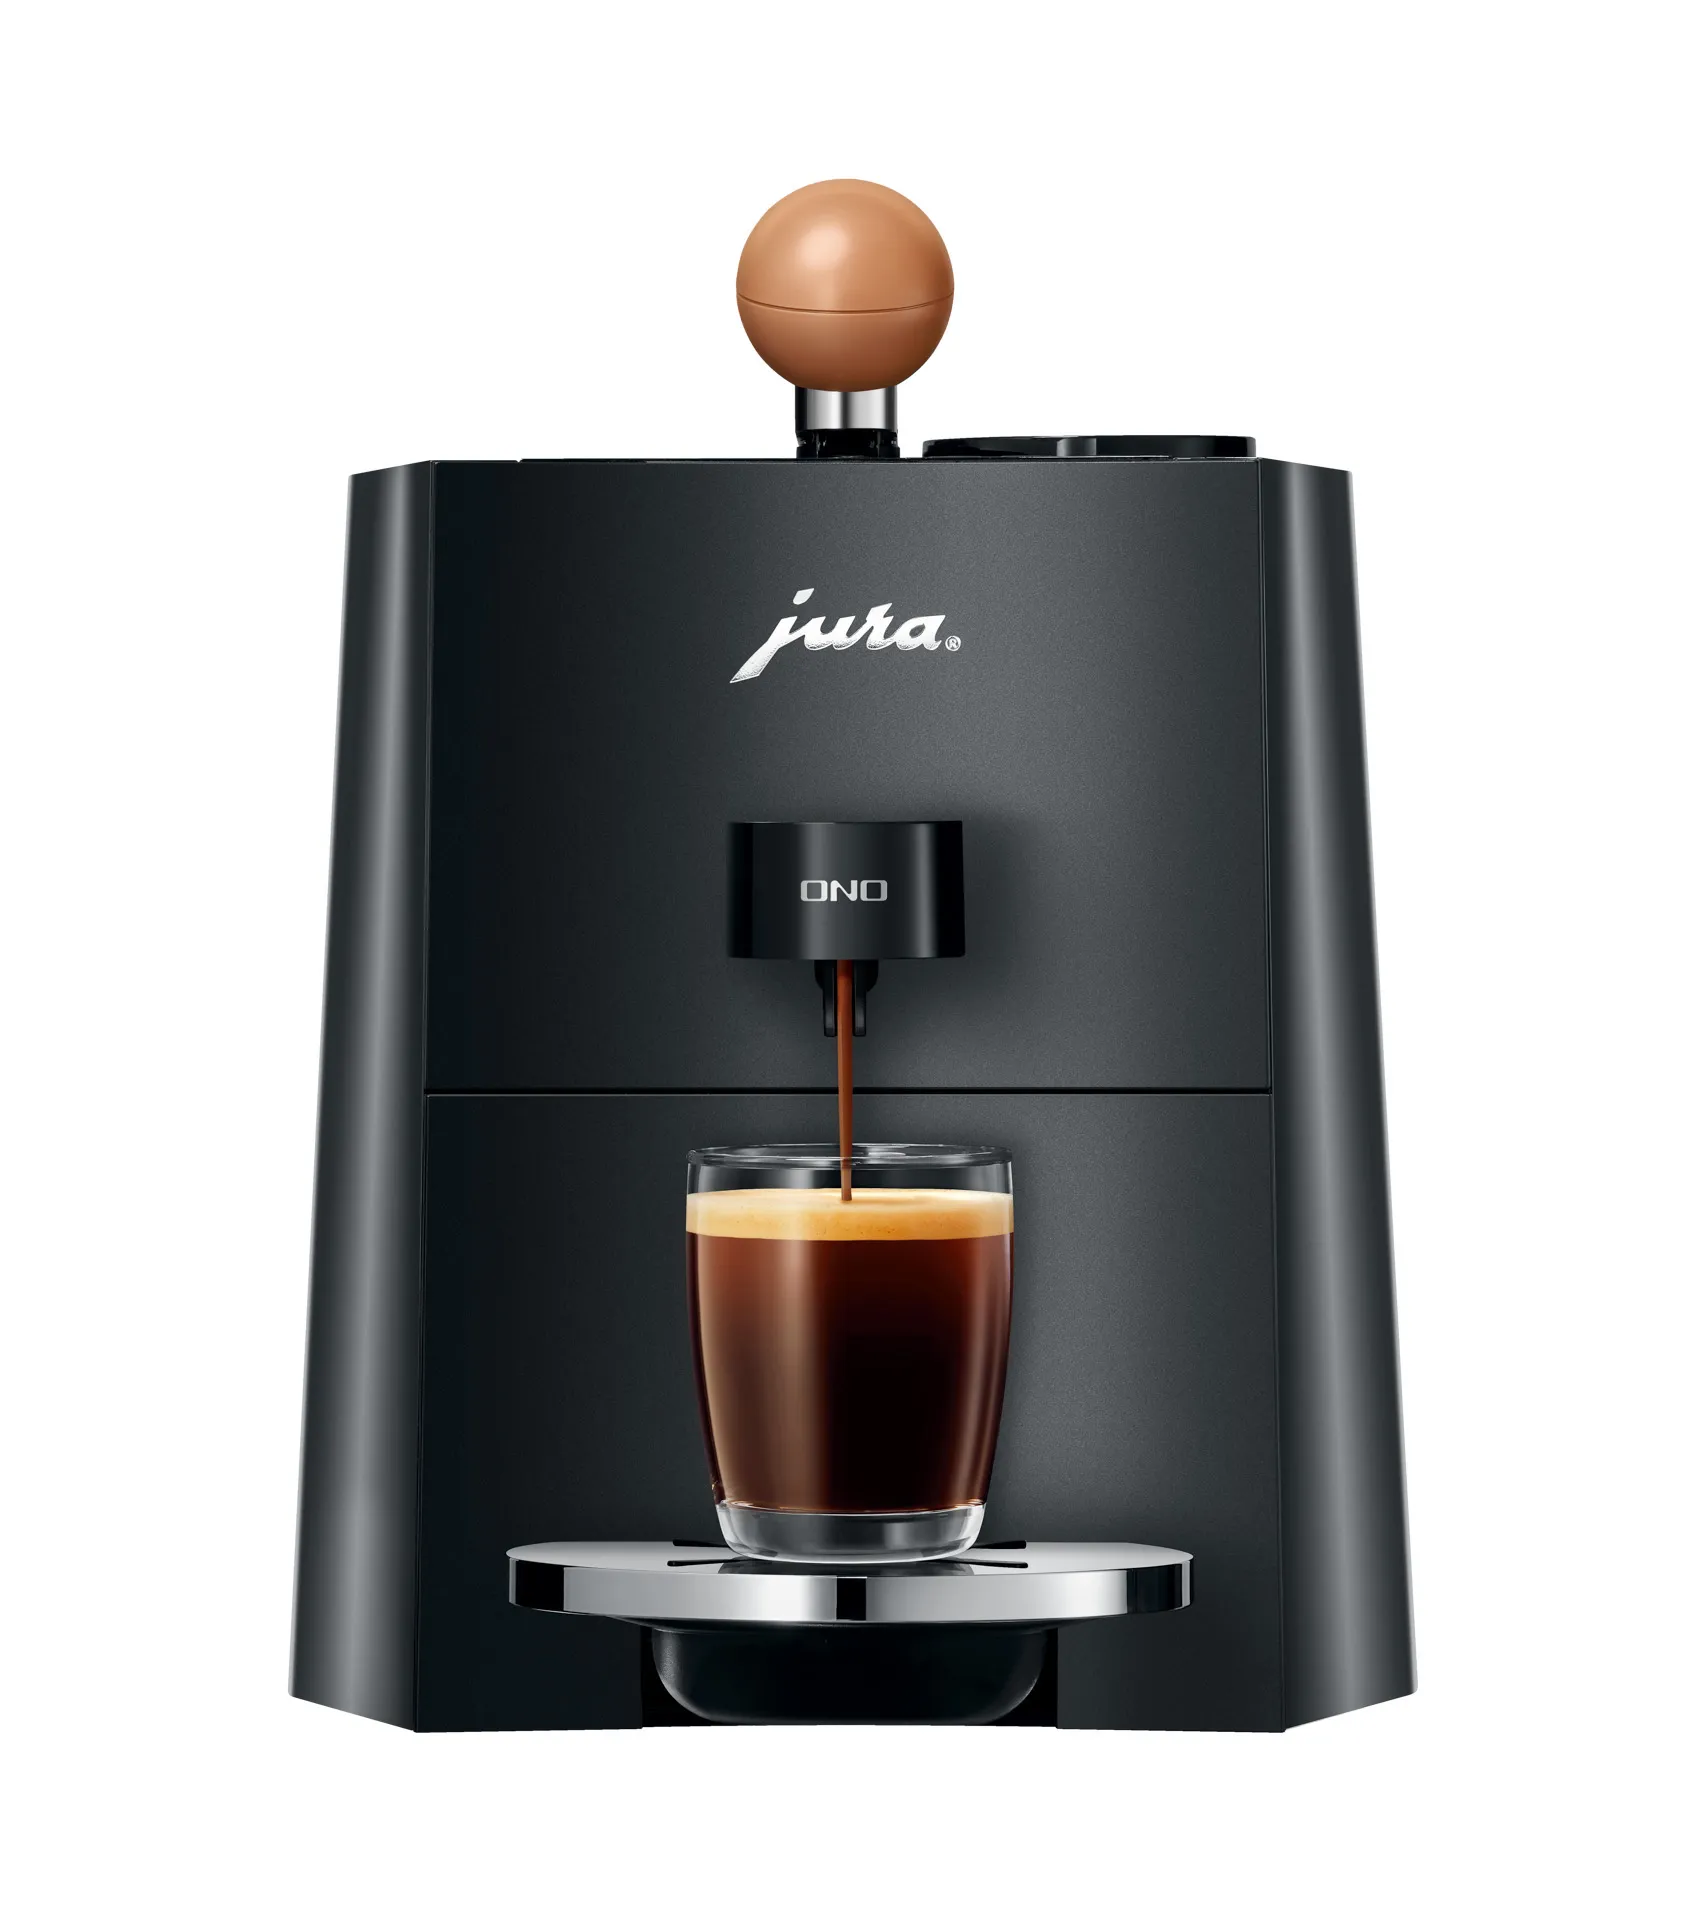 Macchina da caffè Jura ONO Coffee Black+Macina Caffe Jura J25048 P.A.G.+2Kg Caffe Espresso In Grani Jura in OMAGGIO